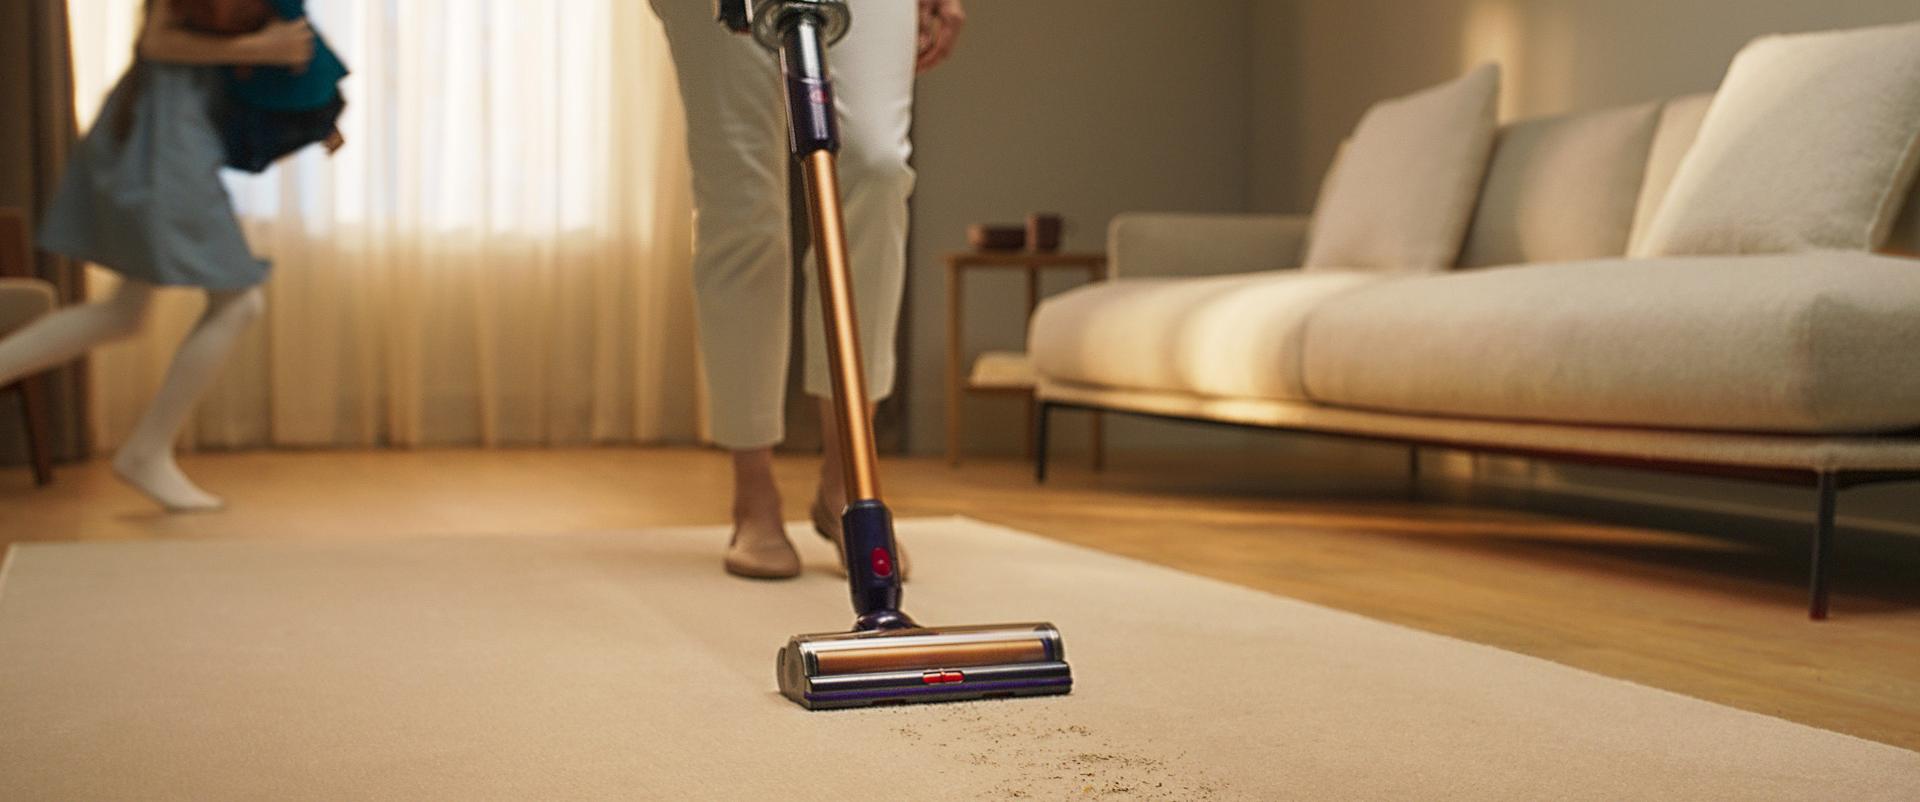 Dyson vacuum motorhead attachment cleaning hard floor then carpet. 